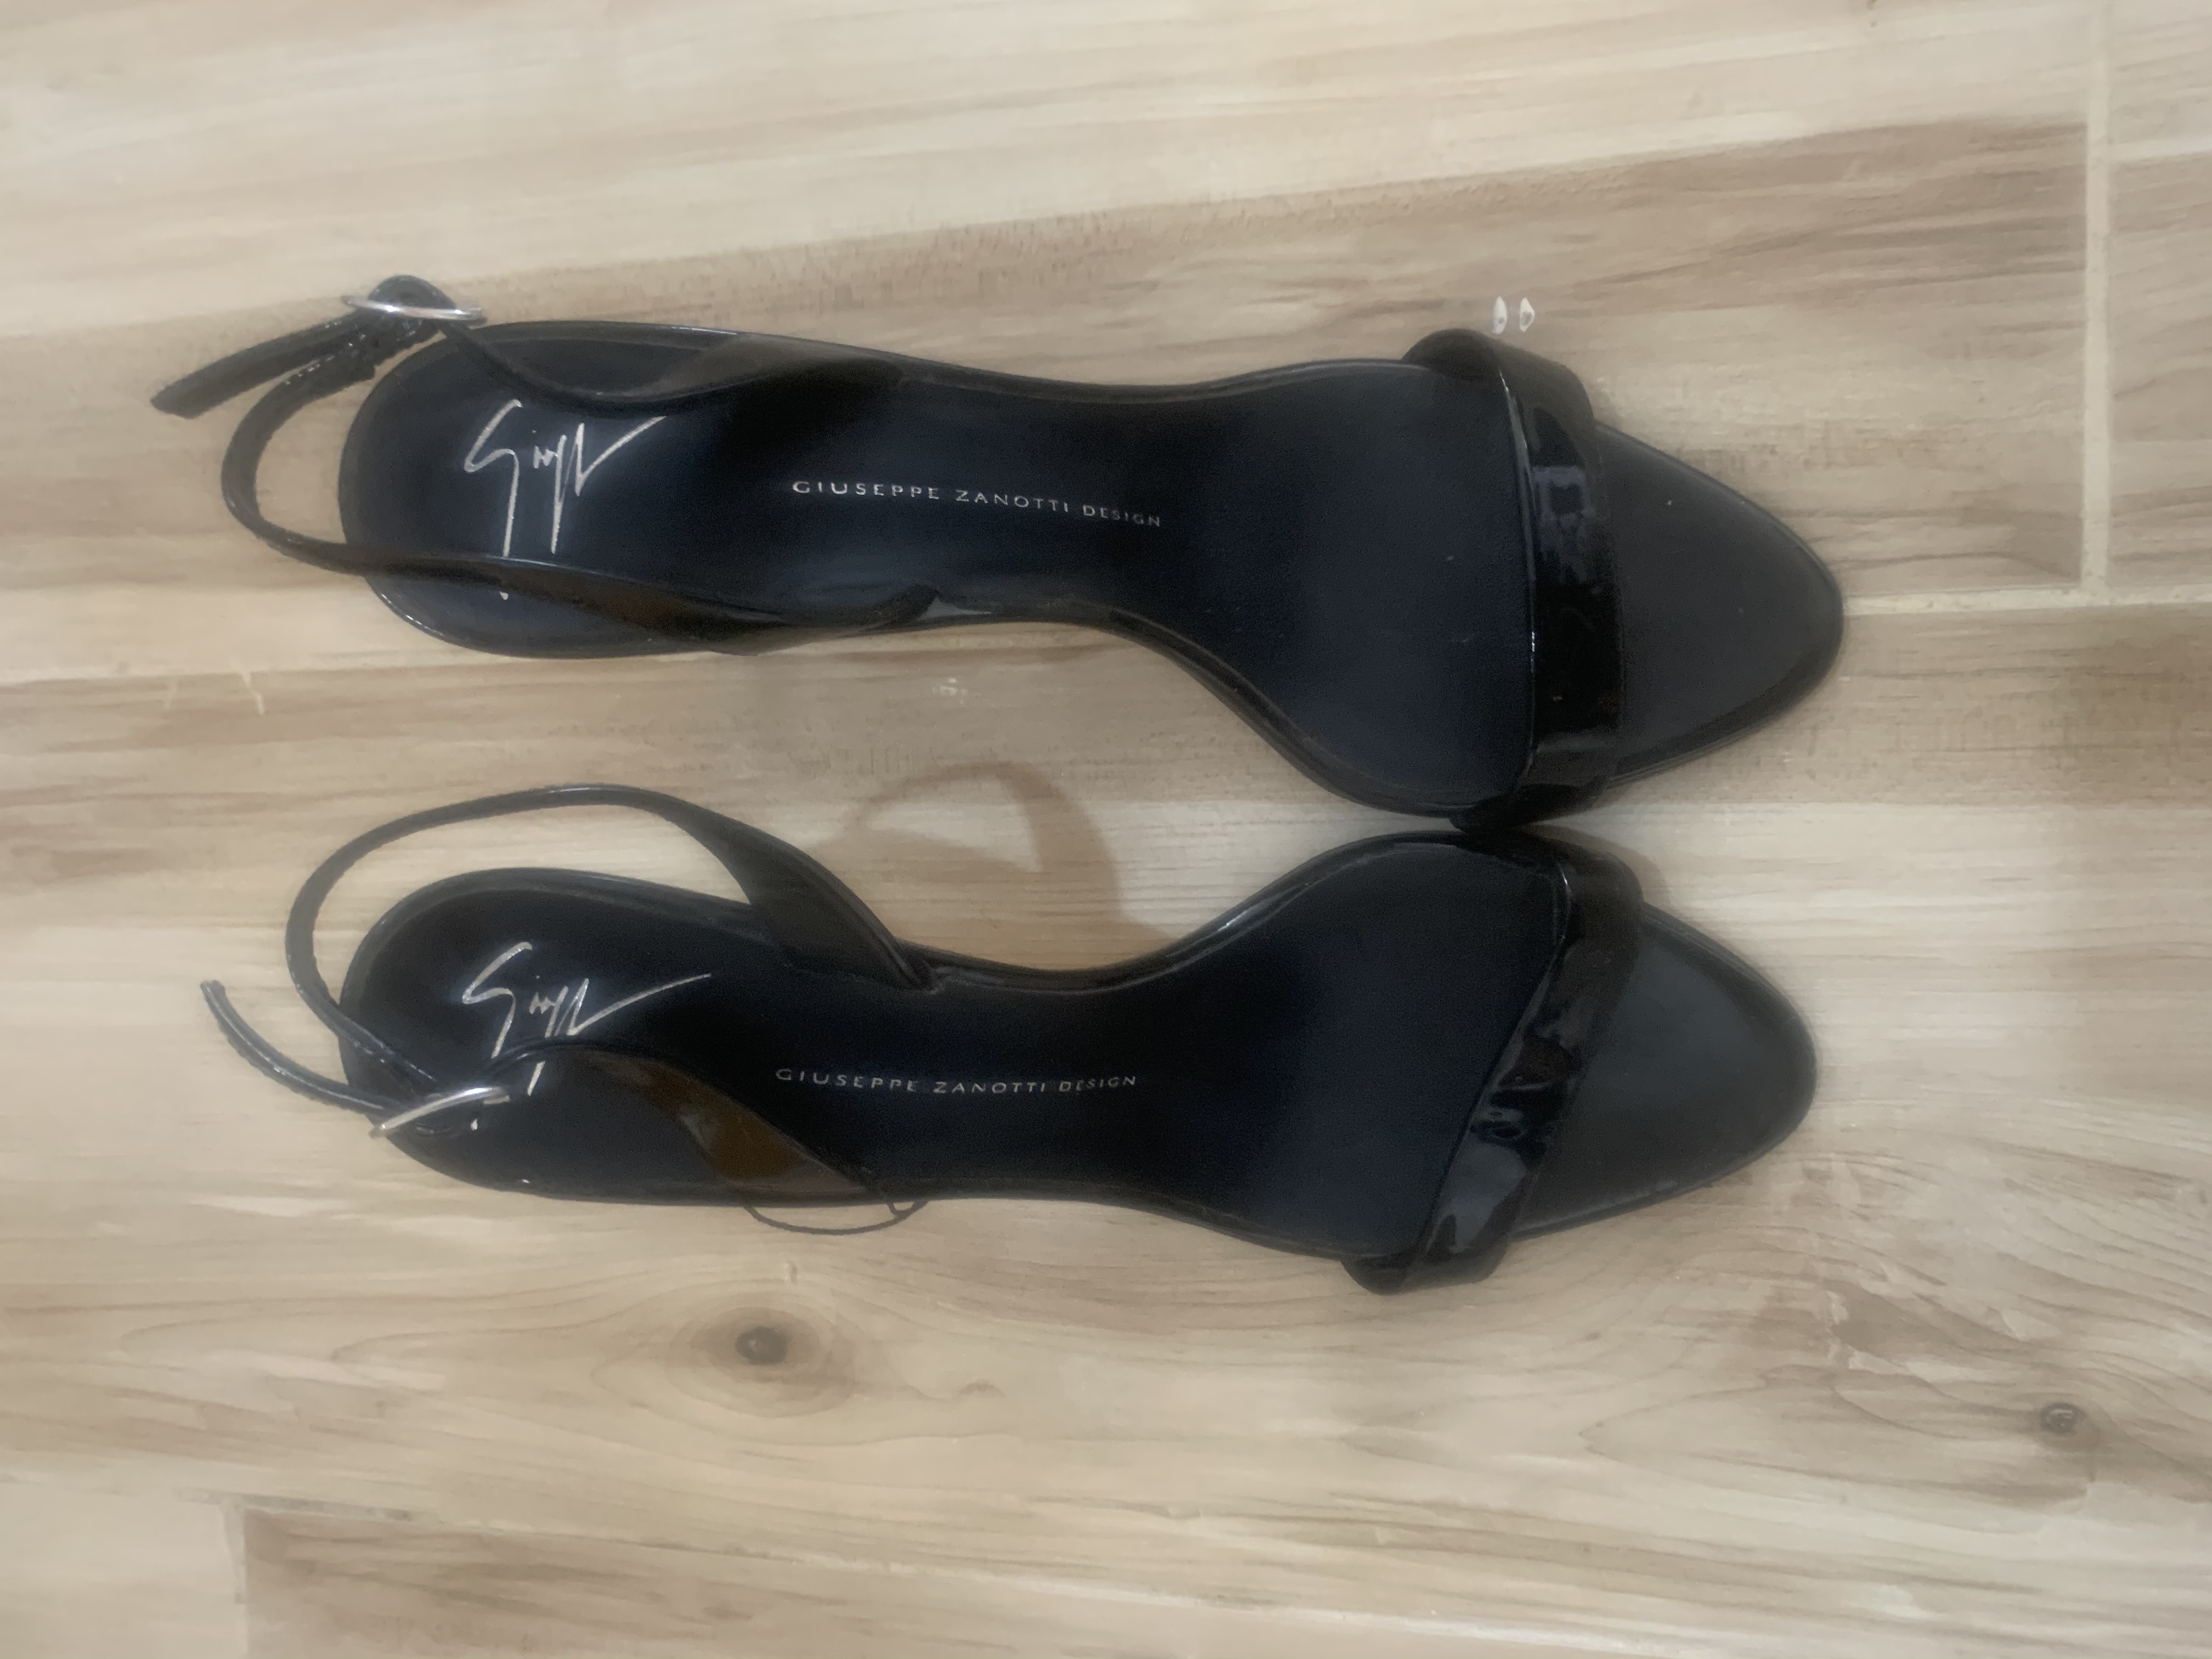 zapatos para mujer - Giuseppe zanotti design size 40